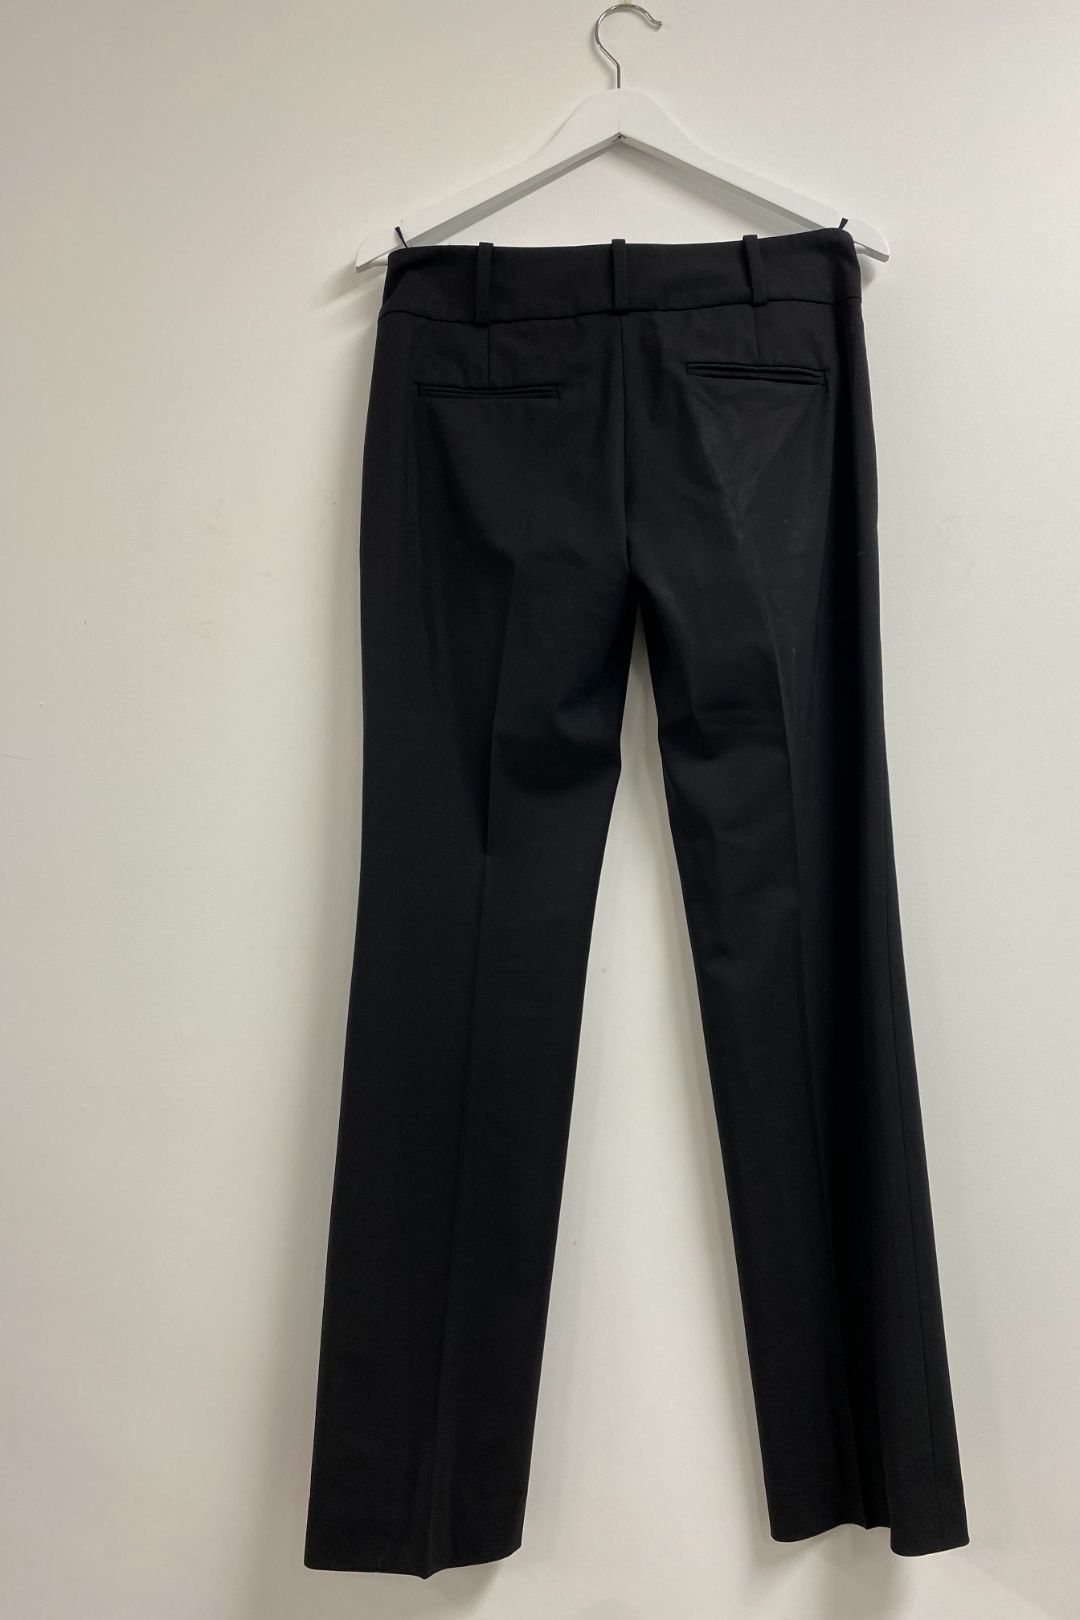 Hugo Boss - Black Tailored Pants